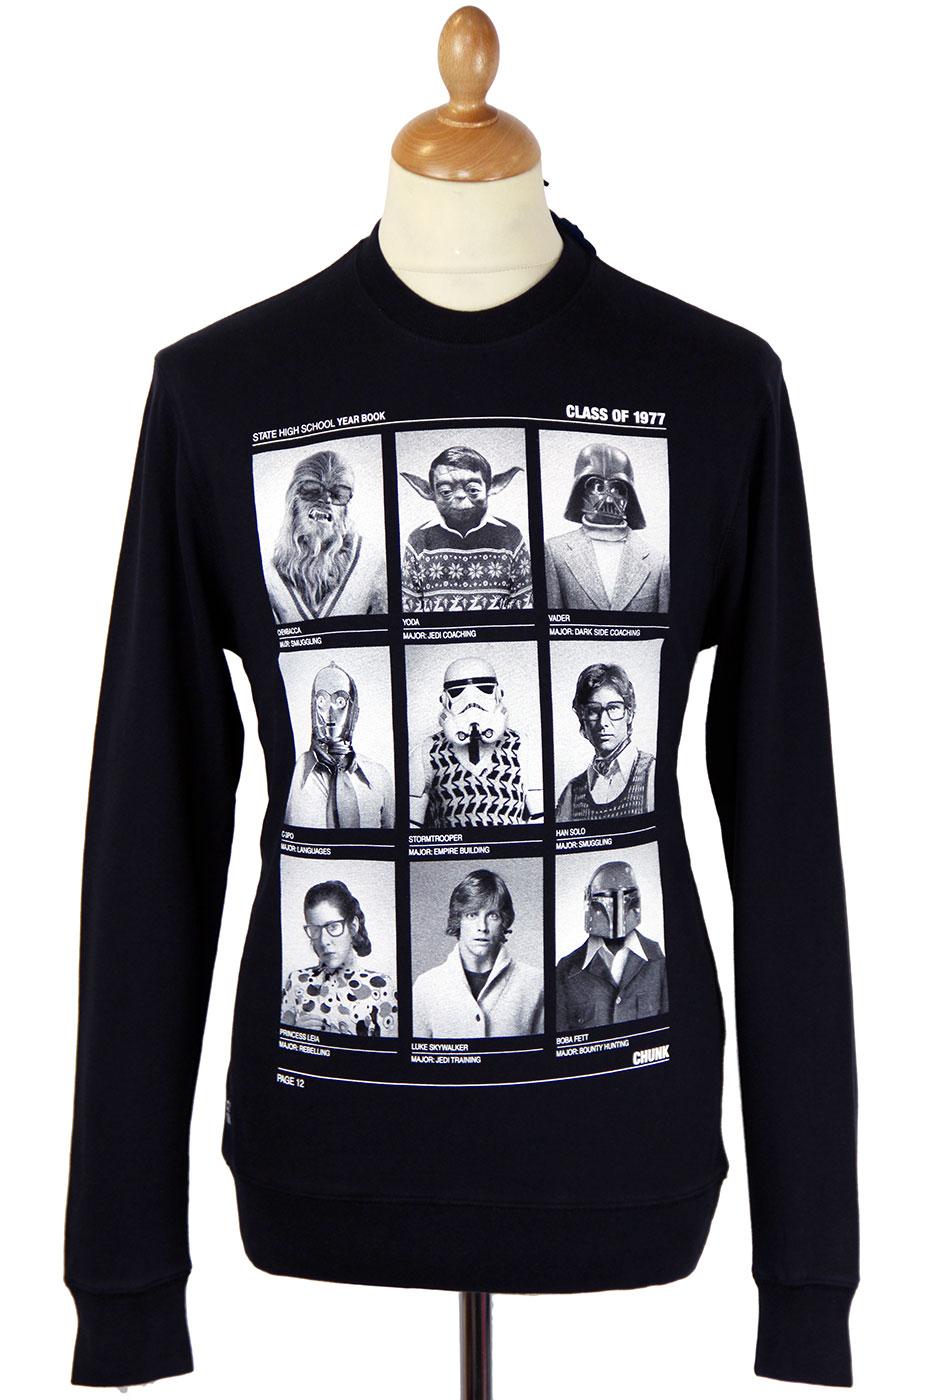 Class of '77 CHUNK Retro 70s Star Wars Sweatshirt